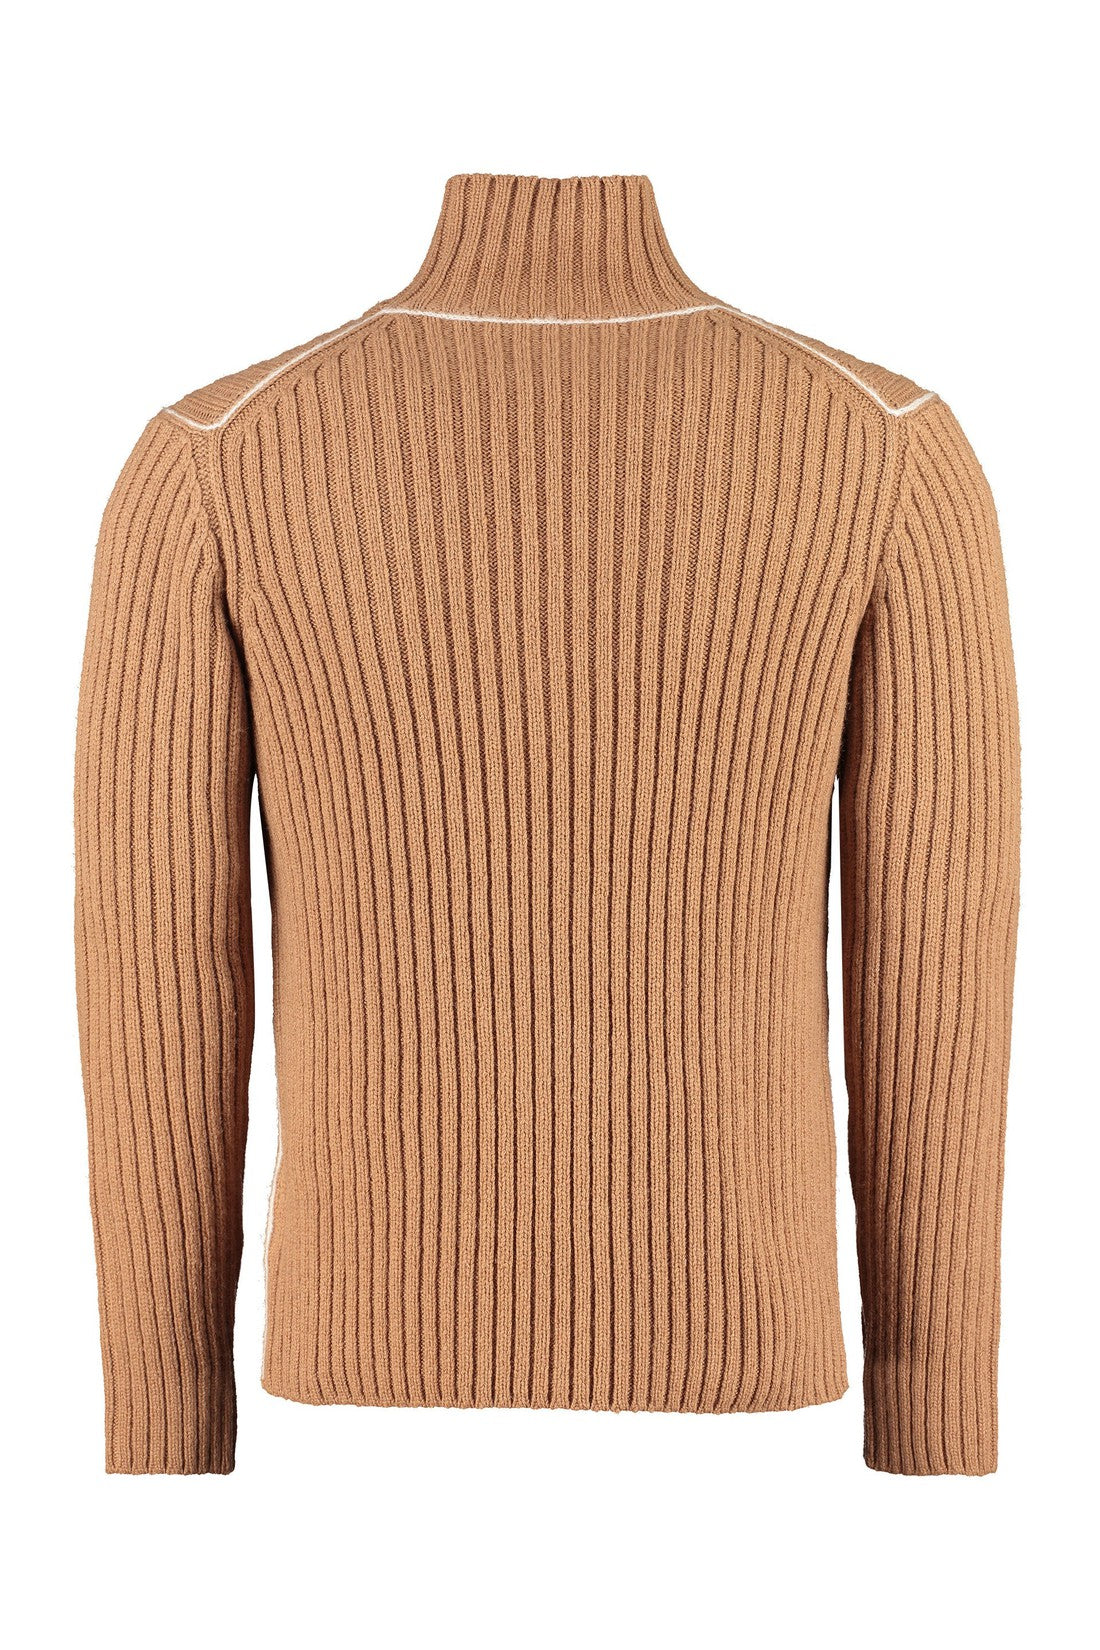 FERRAGAMO-OUTLET-SALE-Ribbed turtleneck sweater-ARCHIVIST